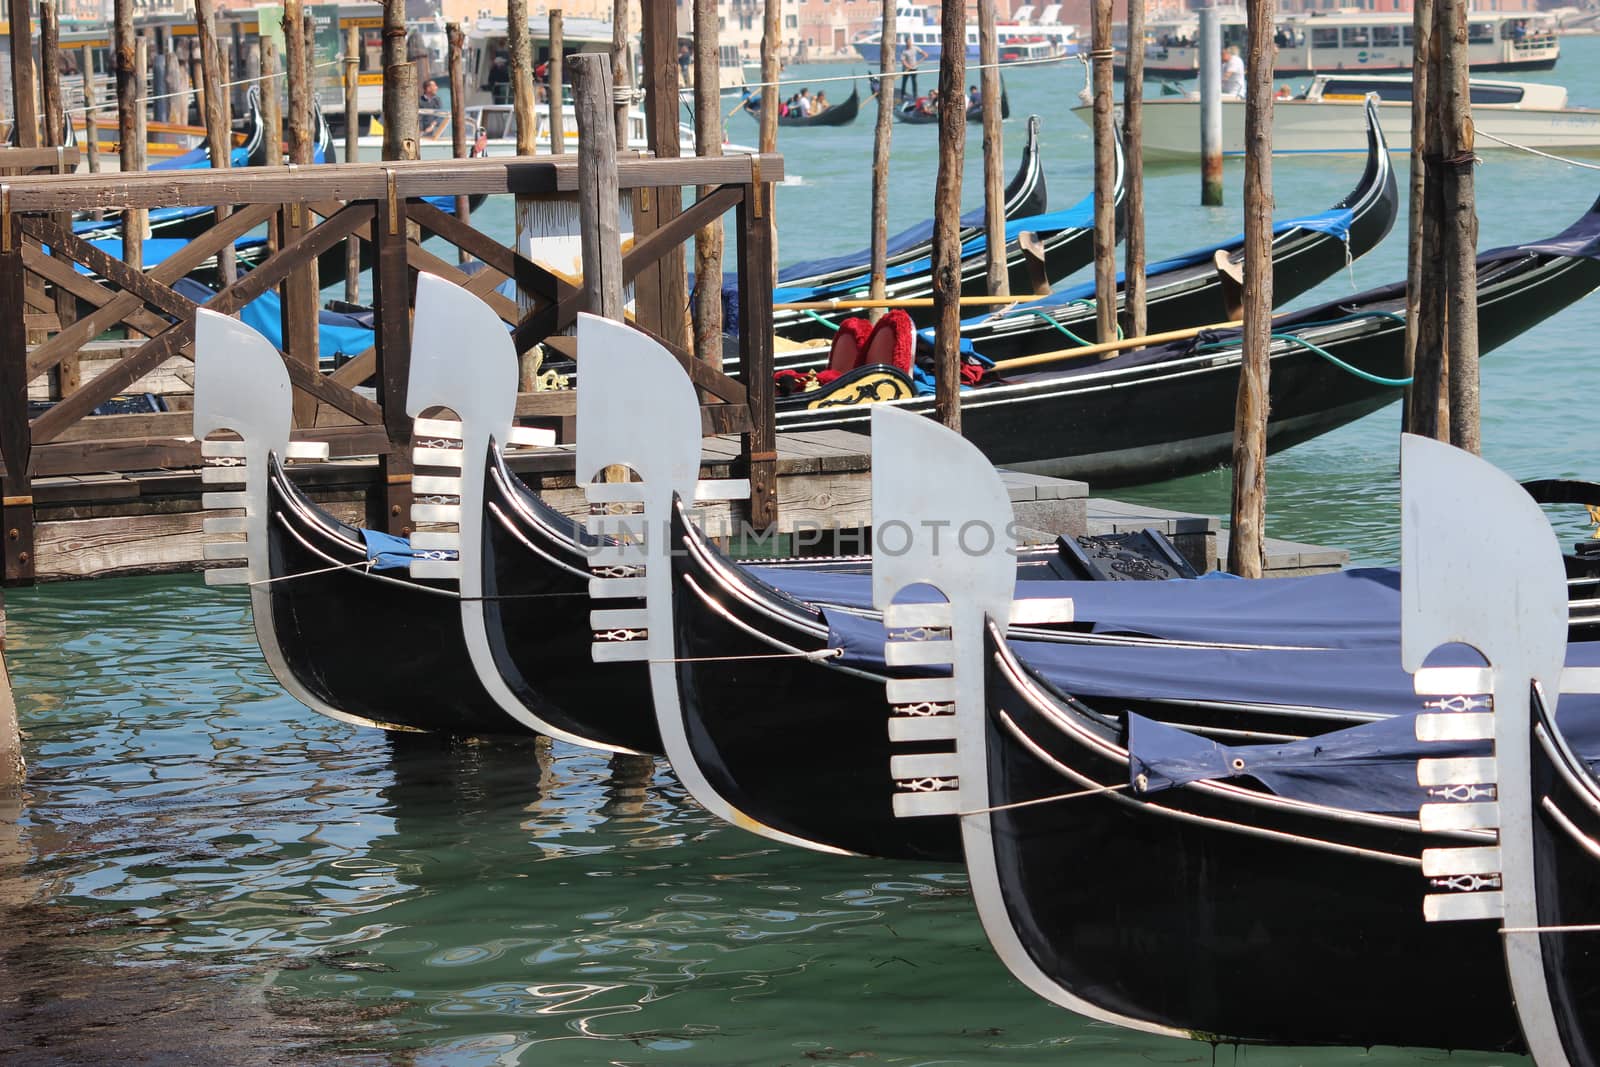 Gondolas lined up in Venice by bensib